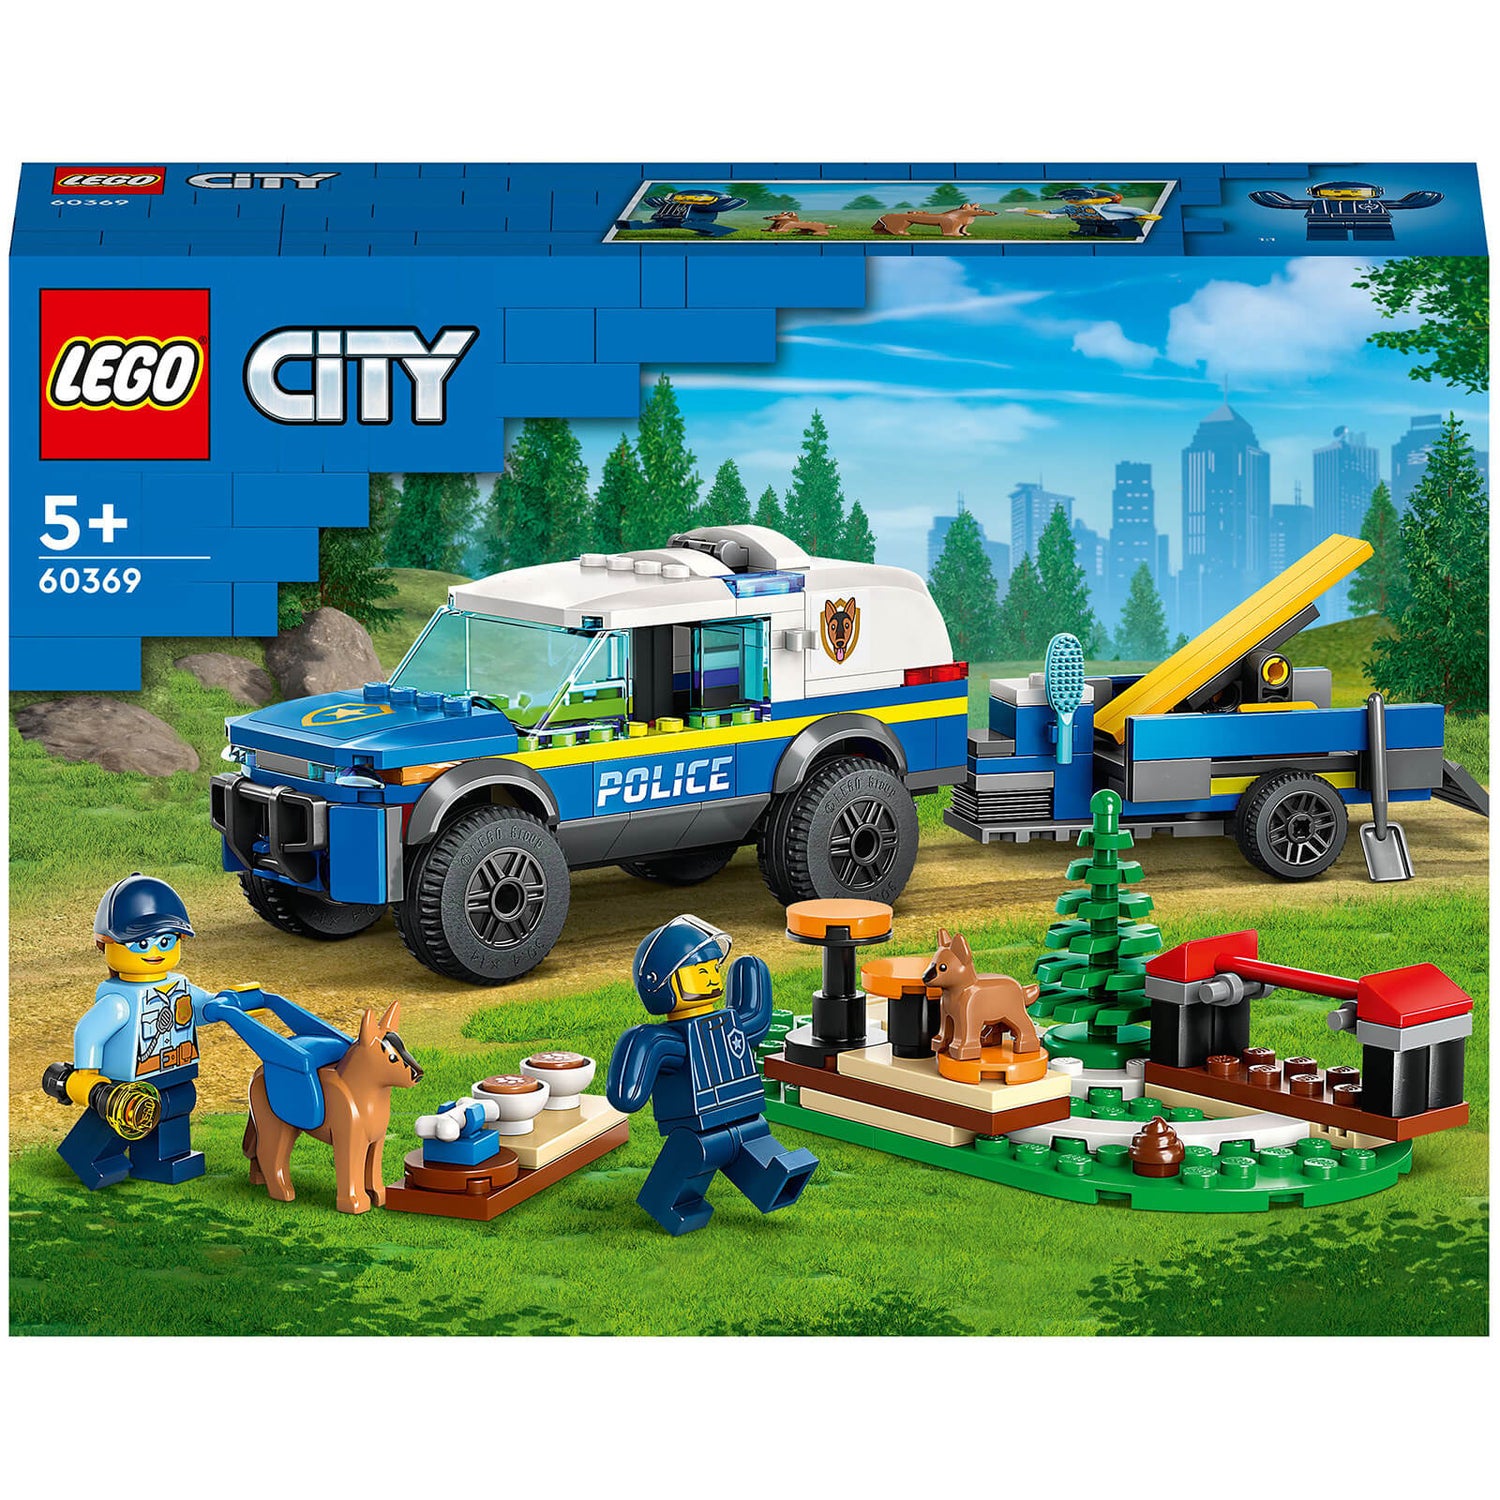 LEGO City: Mobile Police Dog Training Set with Toy Car (60369)